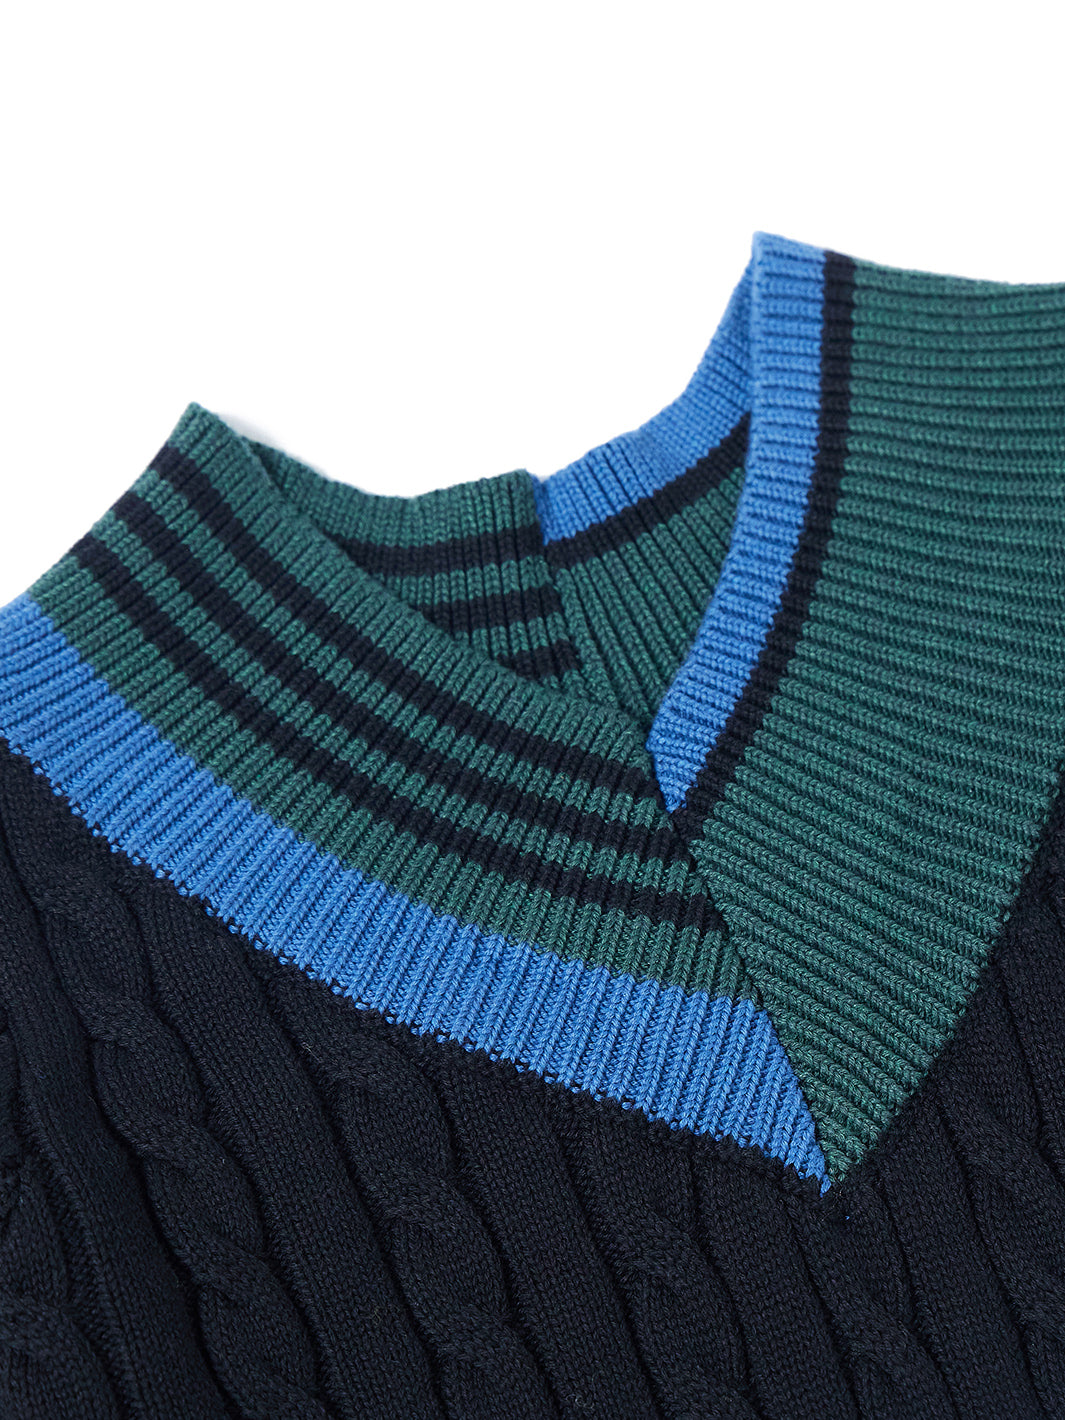 Striped neck cable design Sweater